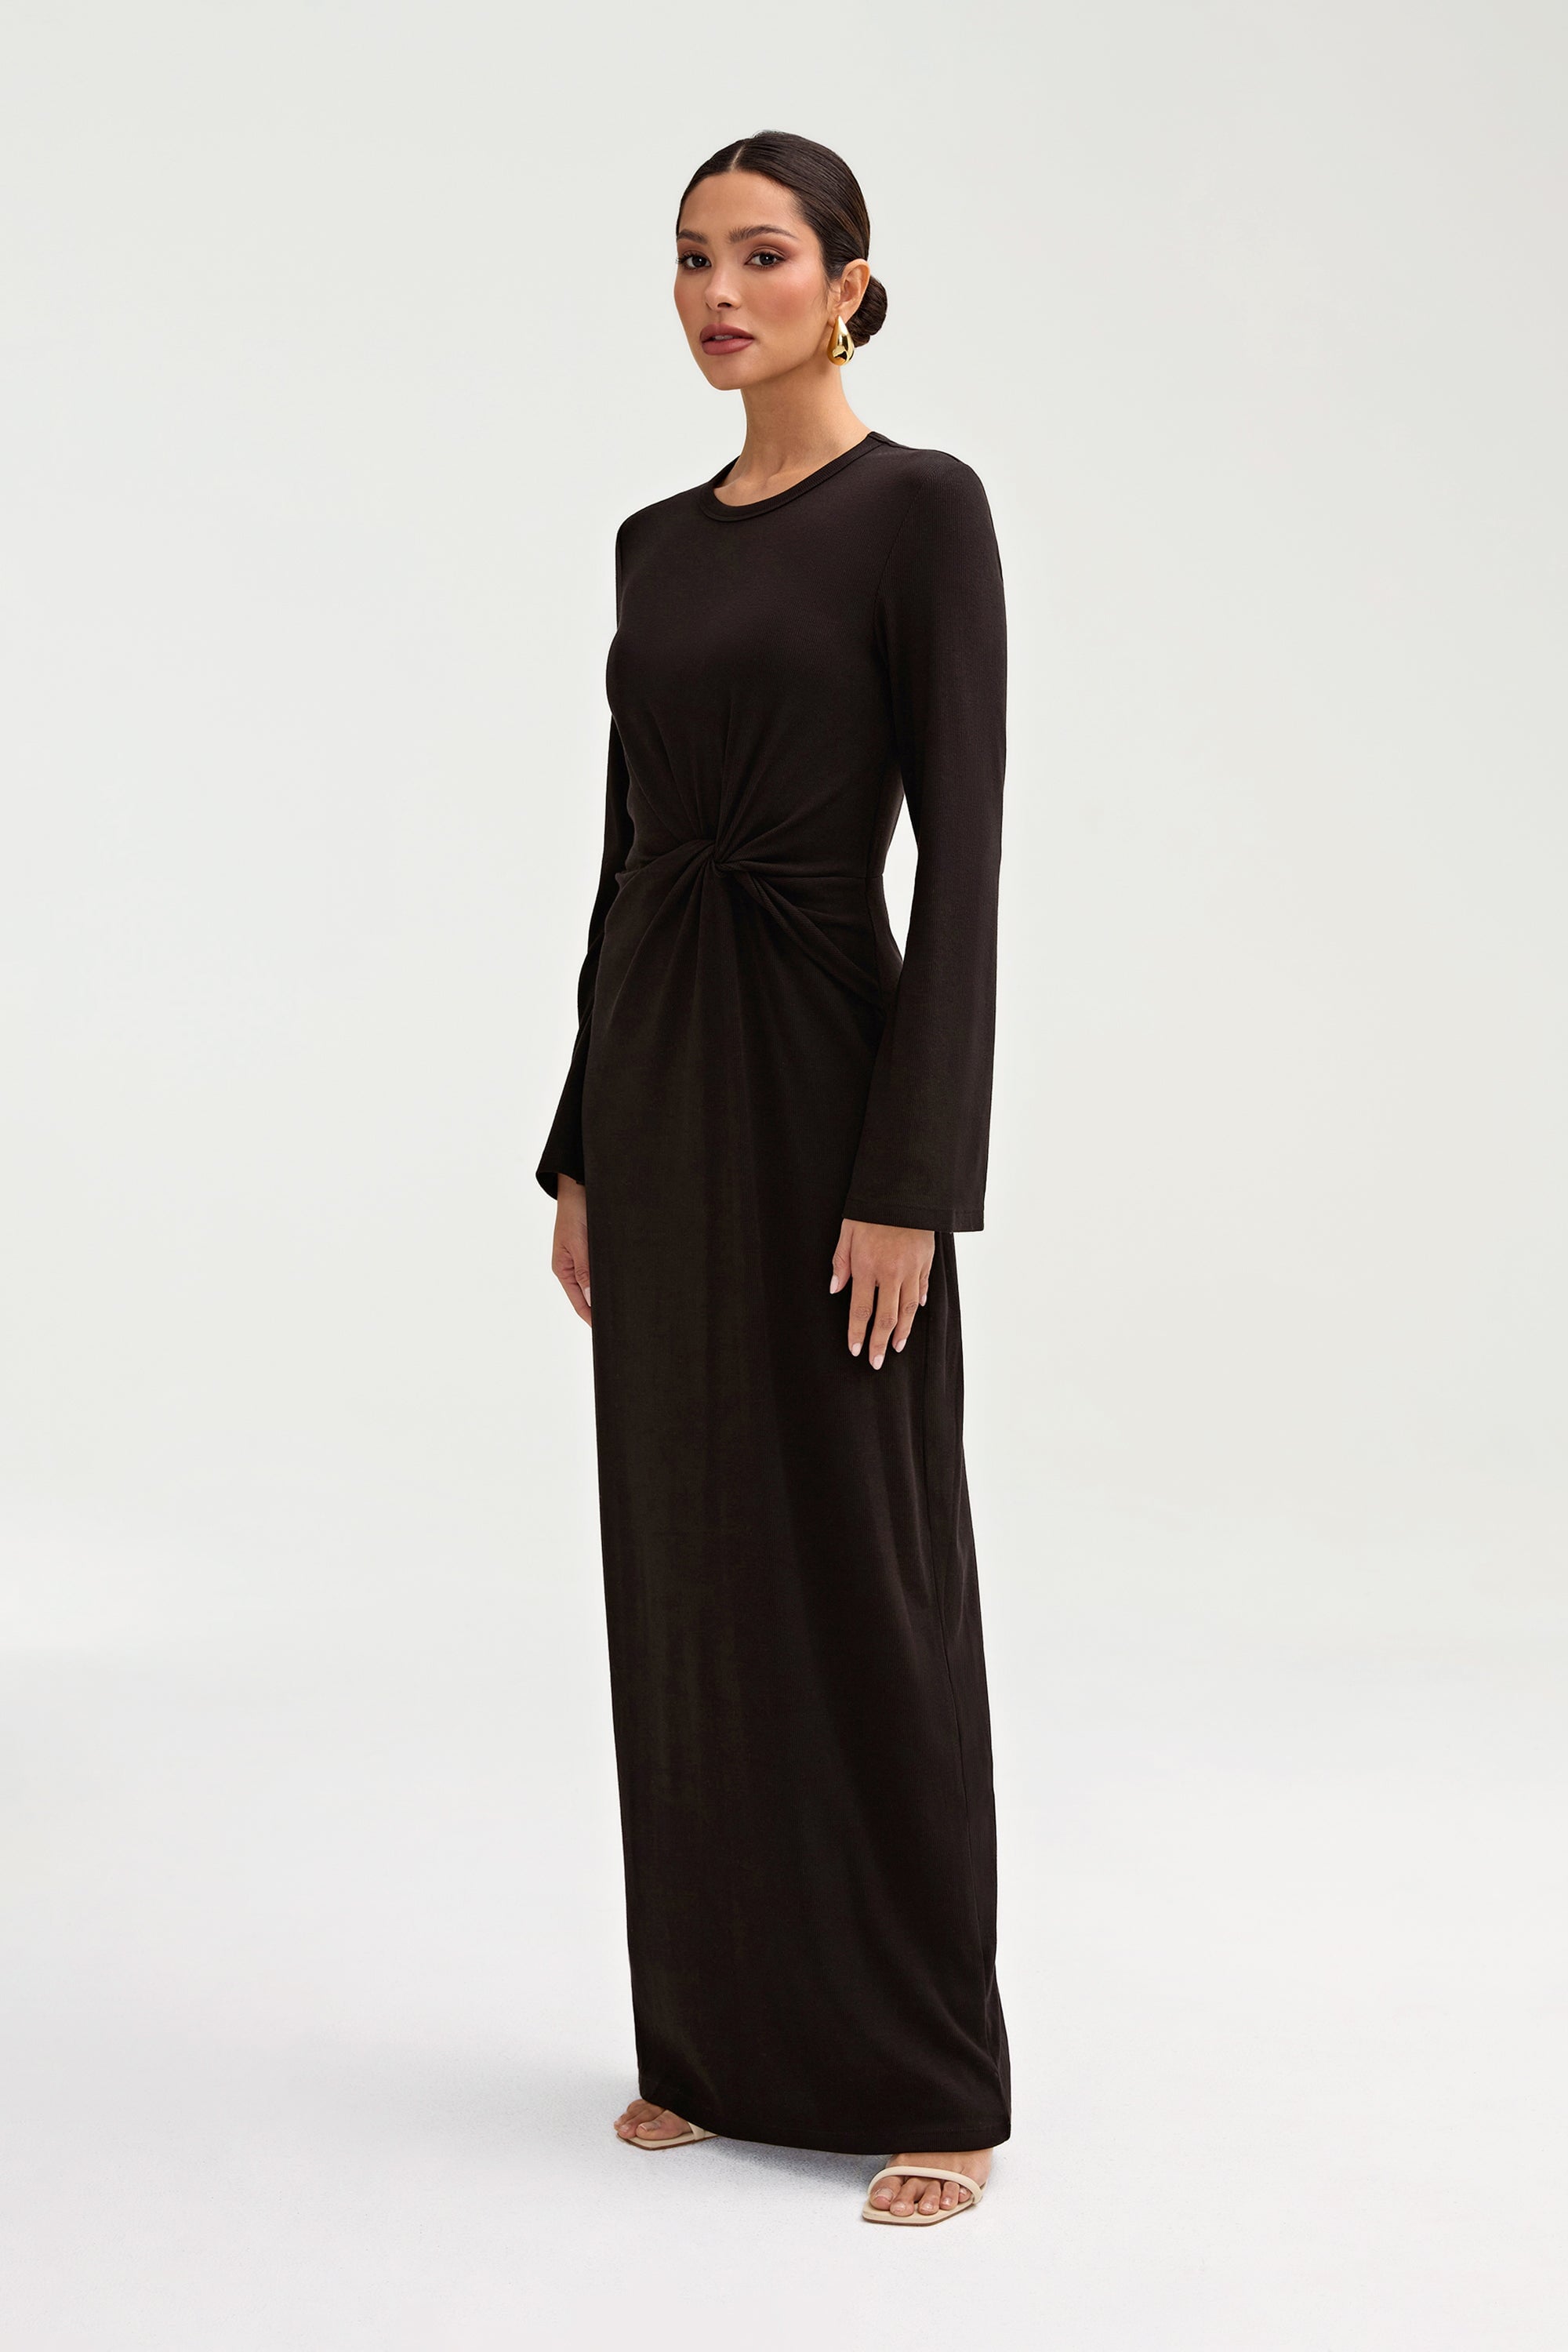 Aissia Ribbed Twist Front Maxi Dress - Black Clothing Veiled 